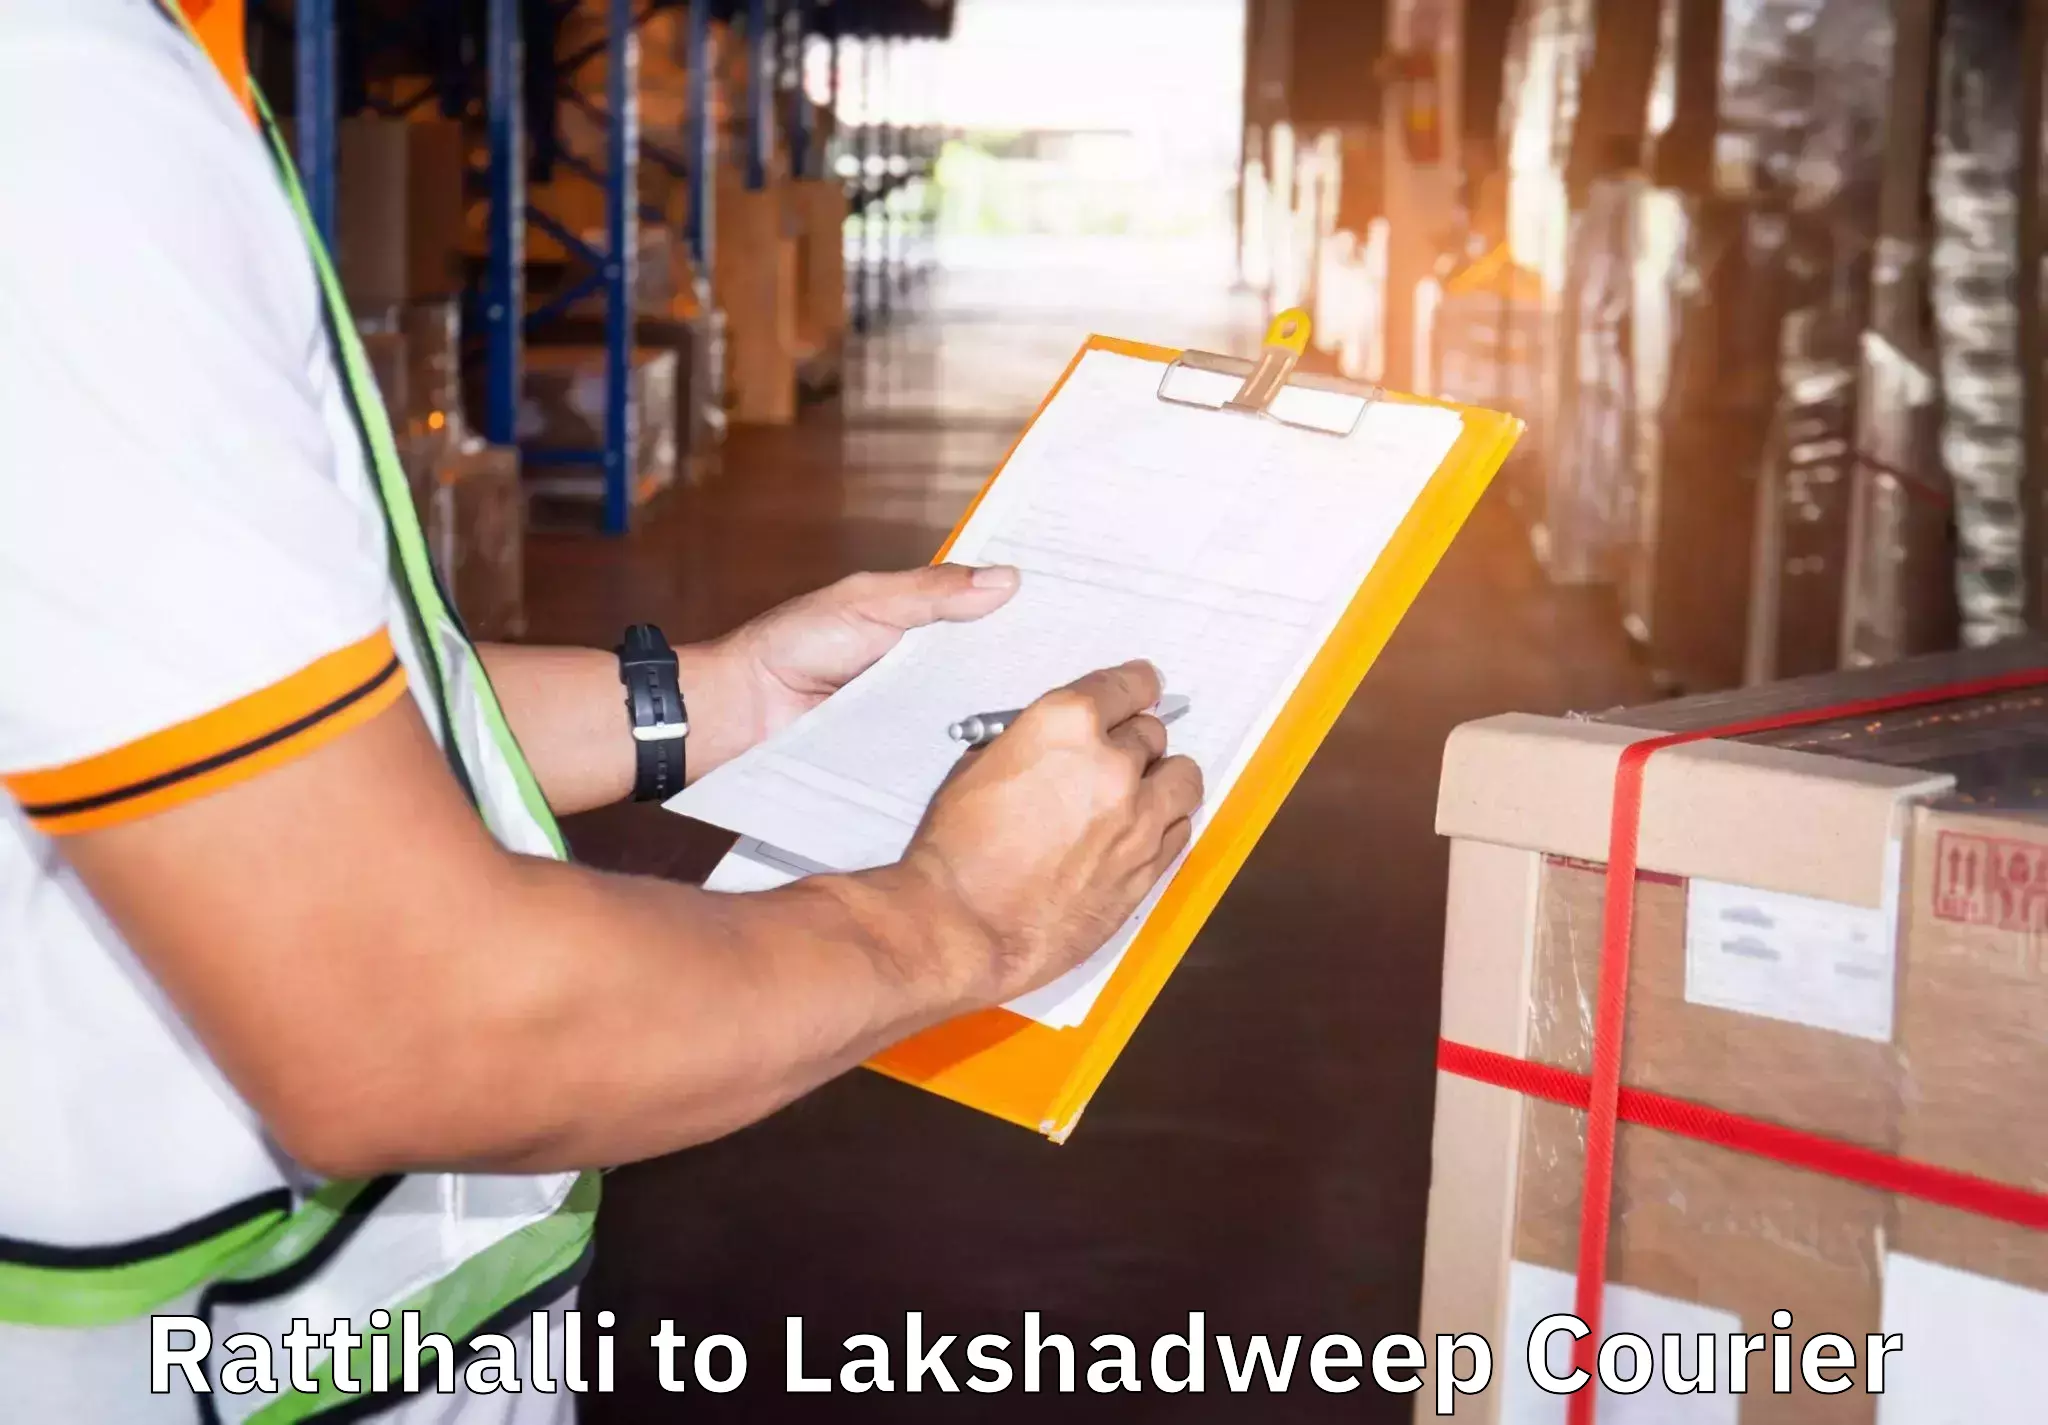 Household transport experts Rattihalli to Lakshadweep